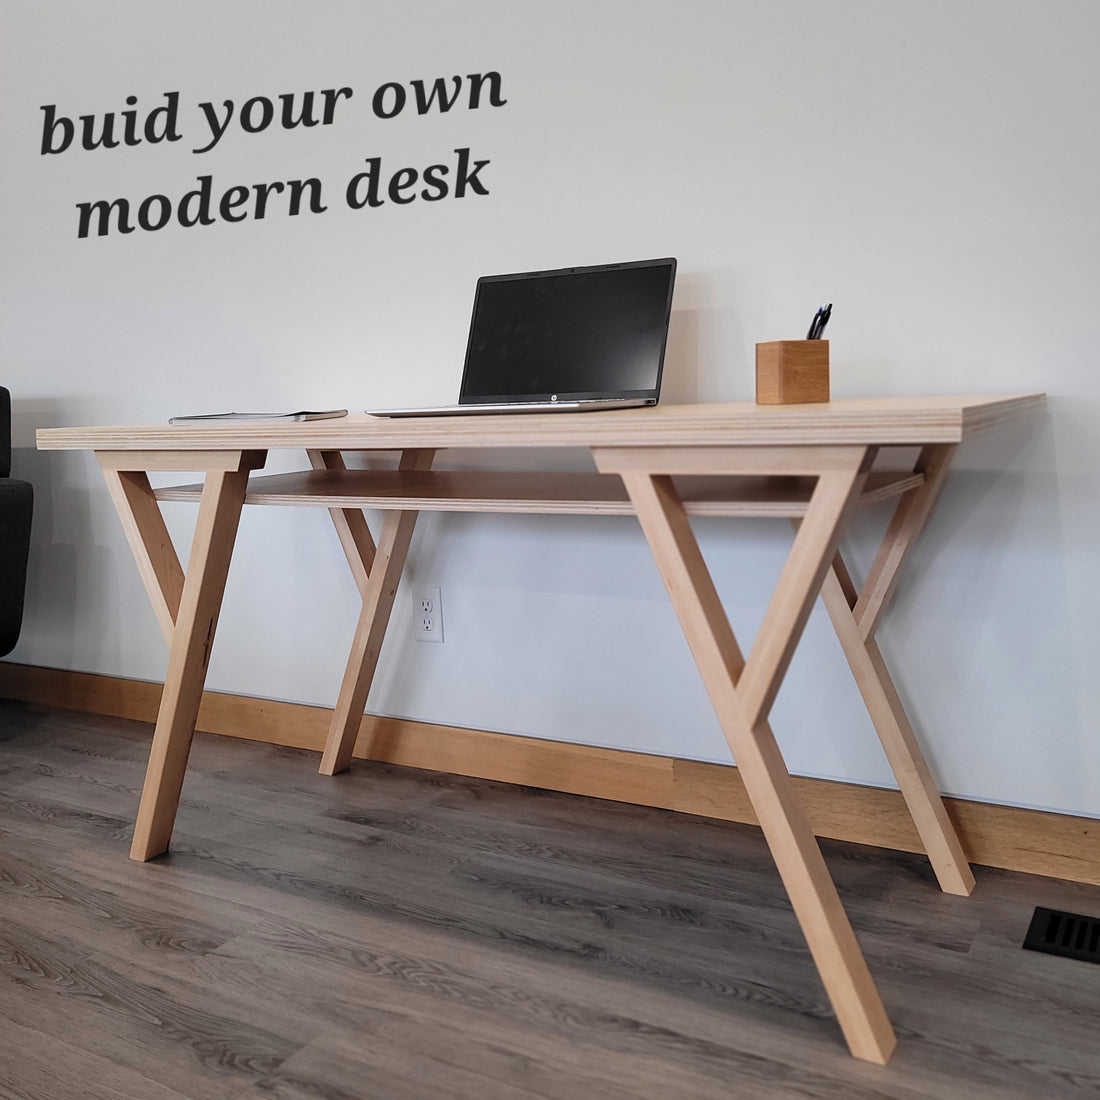 Build your own modern desk